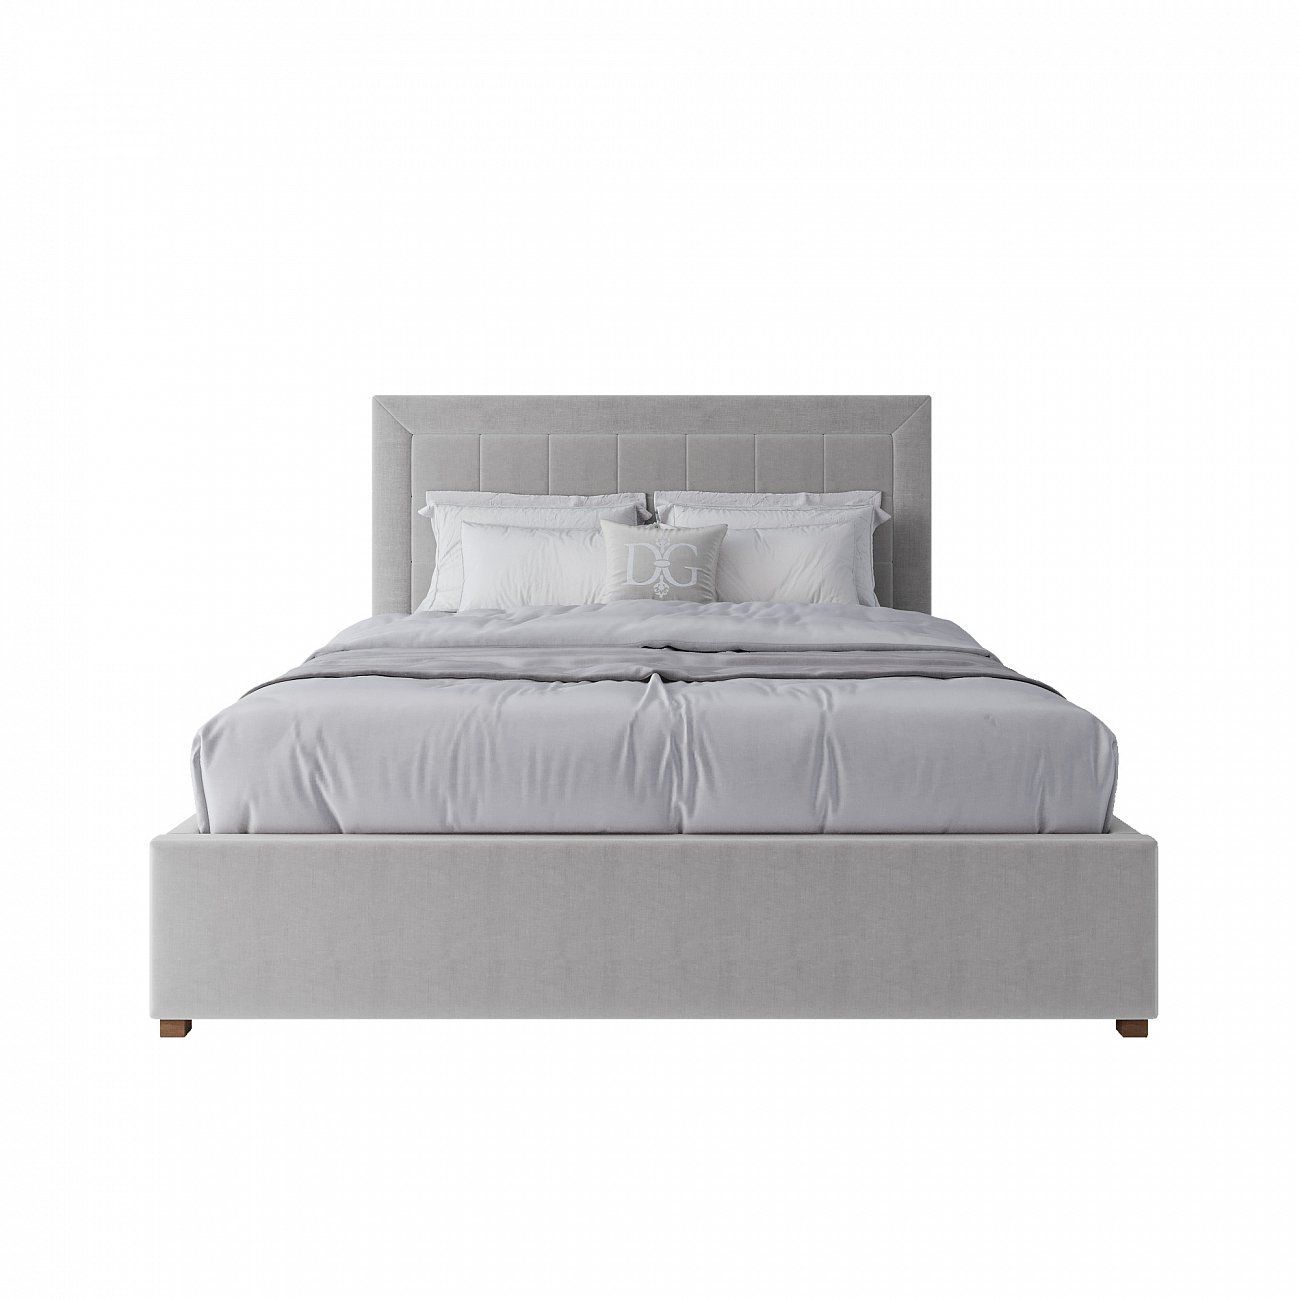 Double bed 160x200 cm light beige Elizabeth